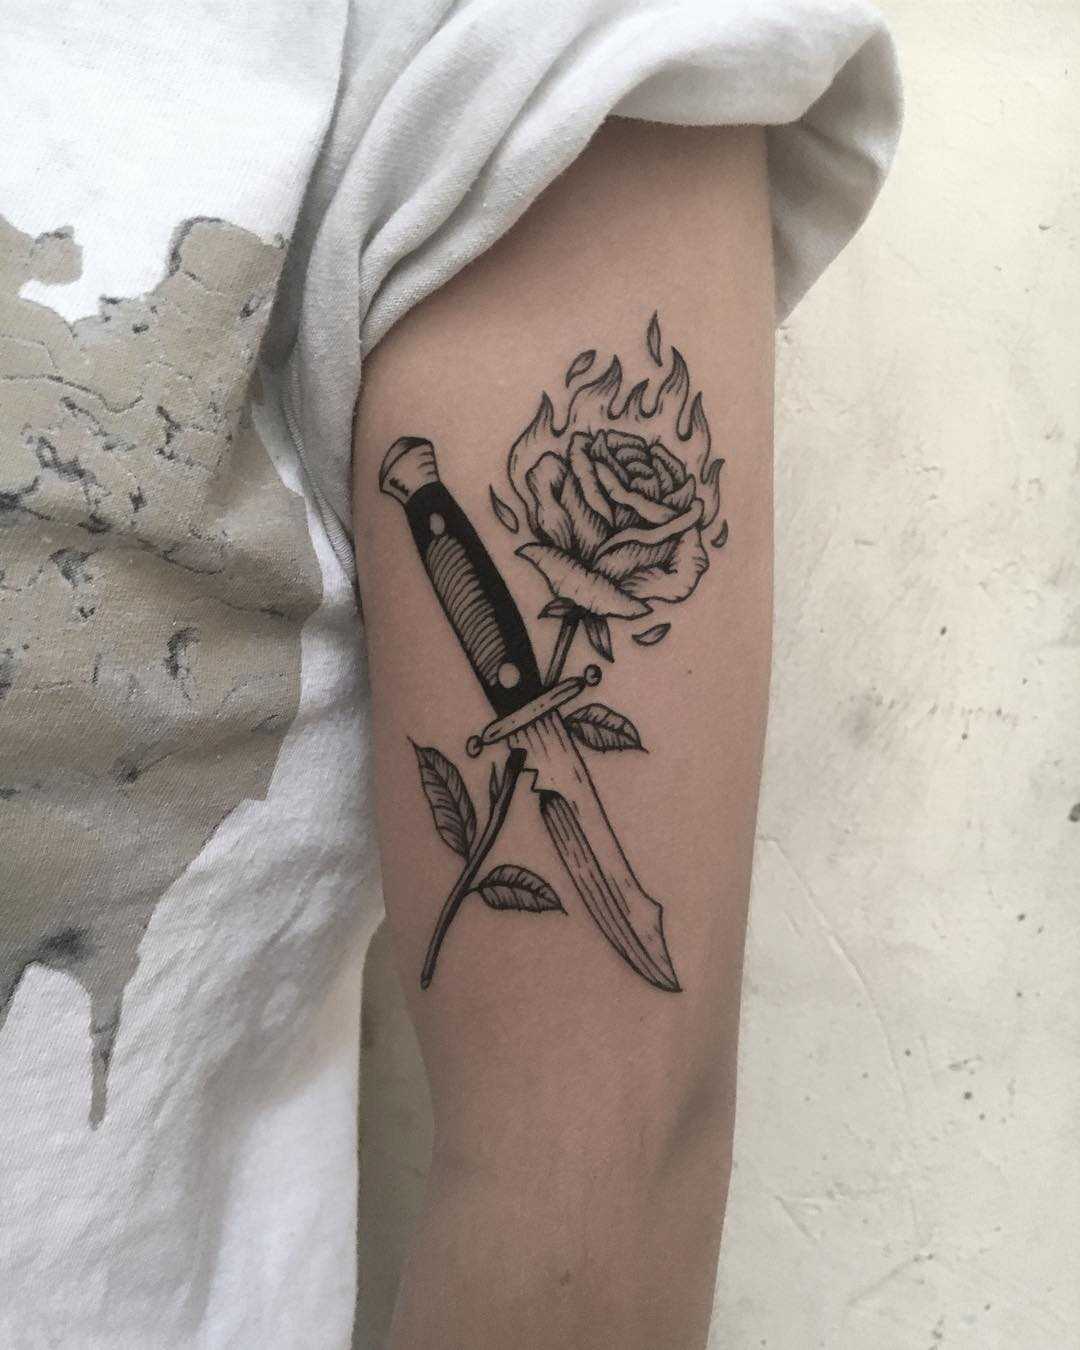 Knife and burning rose tattoo - Tattoogrid.net